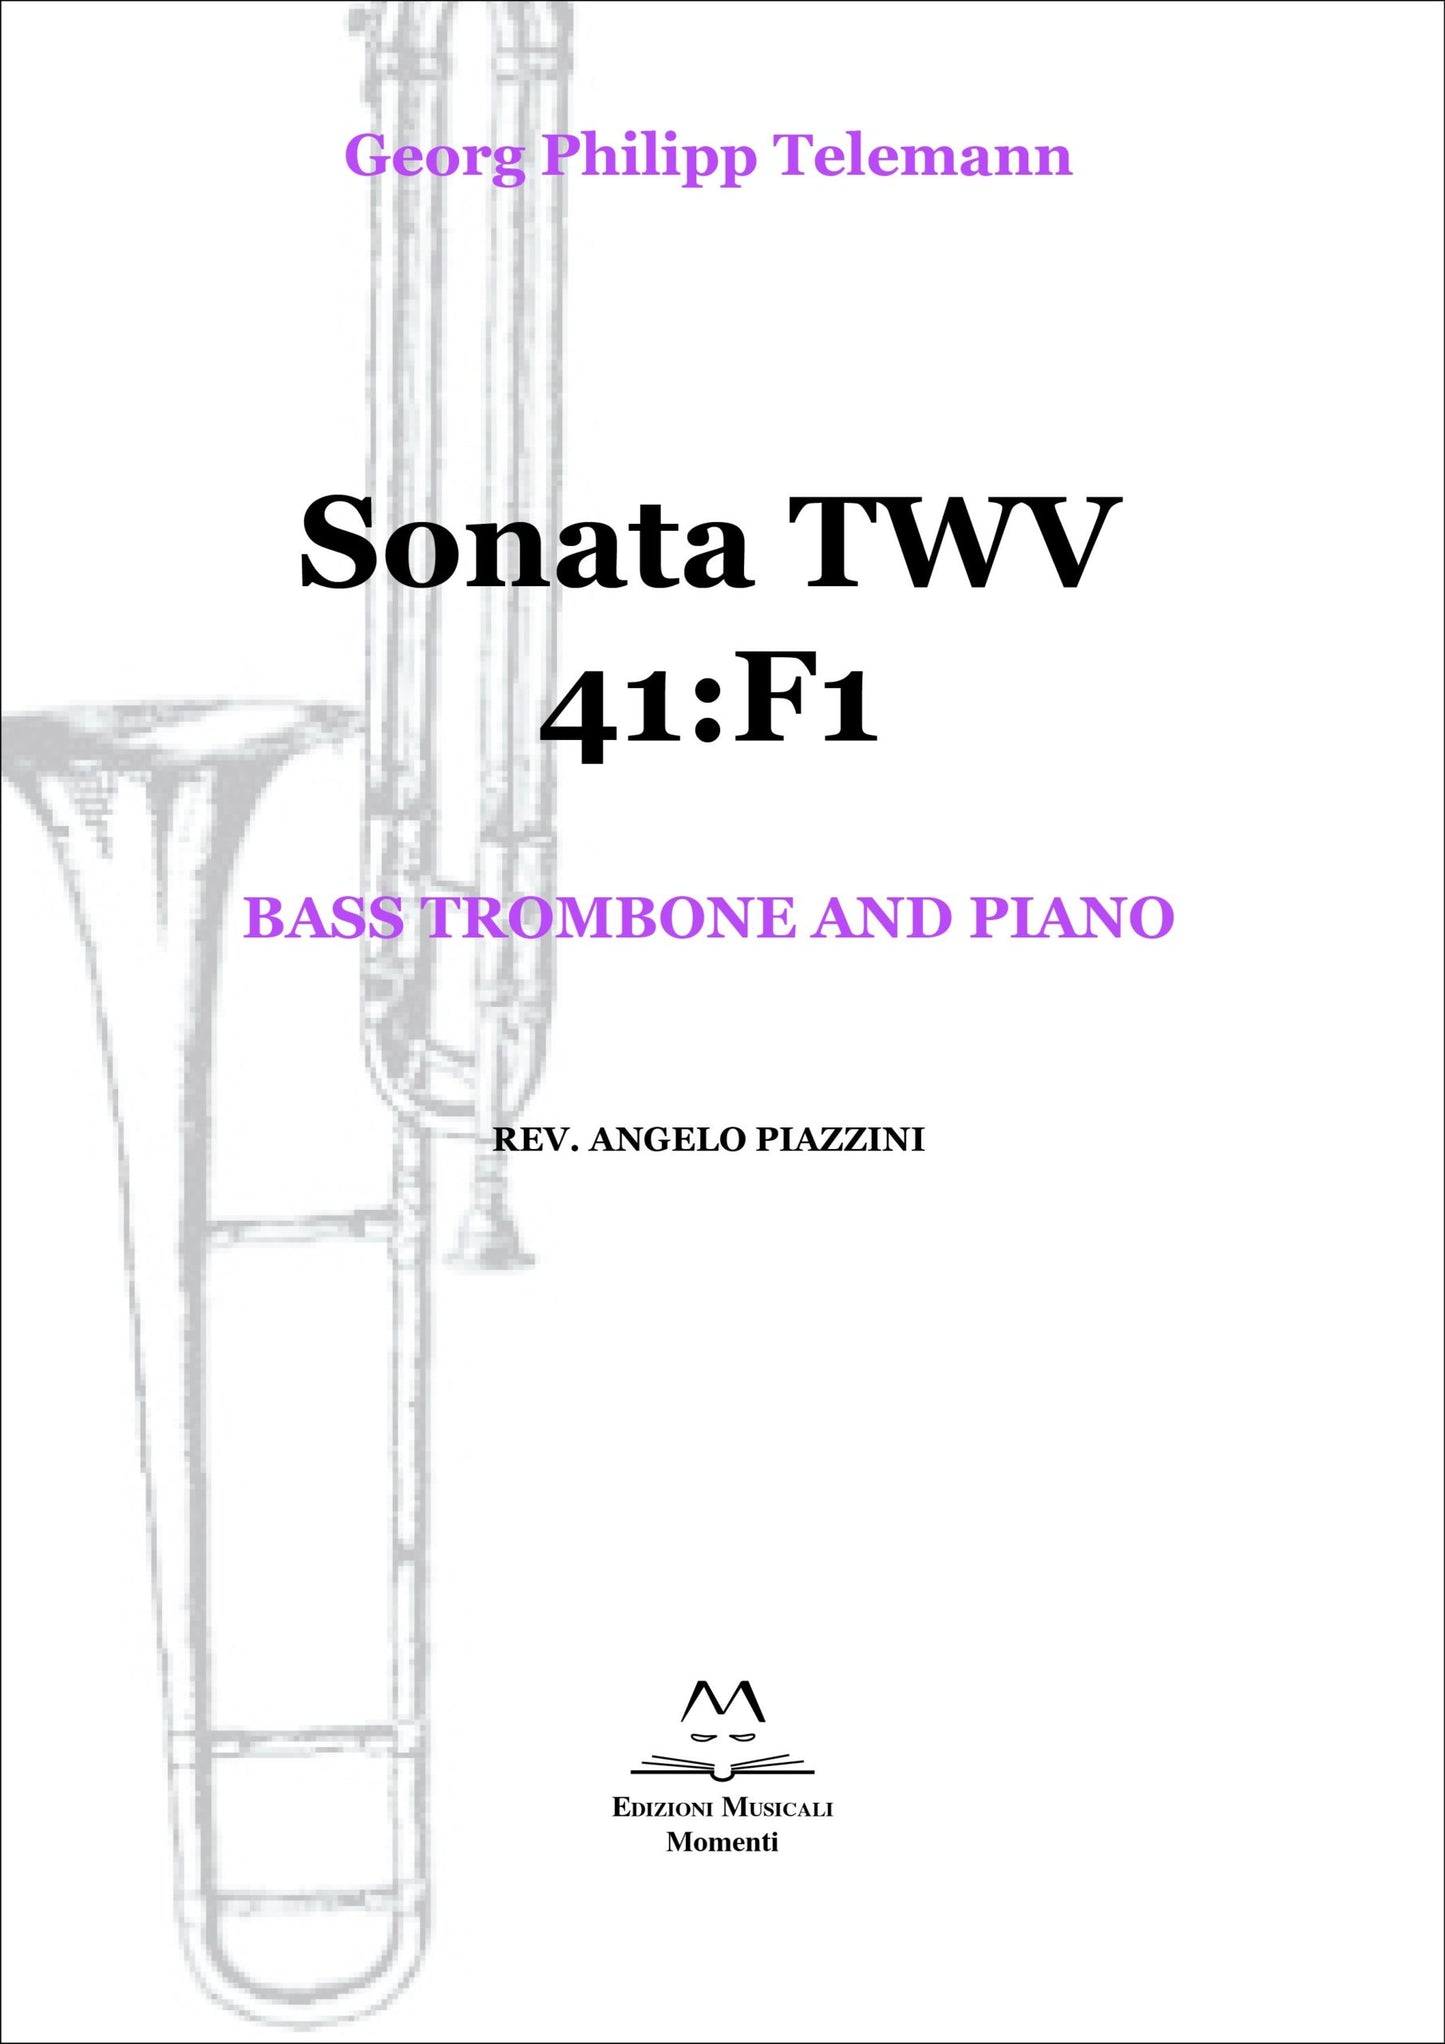 Sonata TWV 41:F1 - Bass trombone and piano rev. Angelo Piazzini